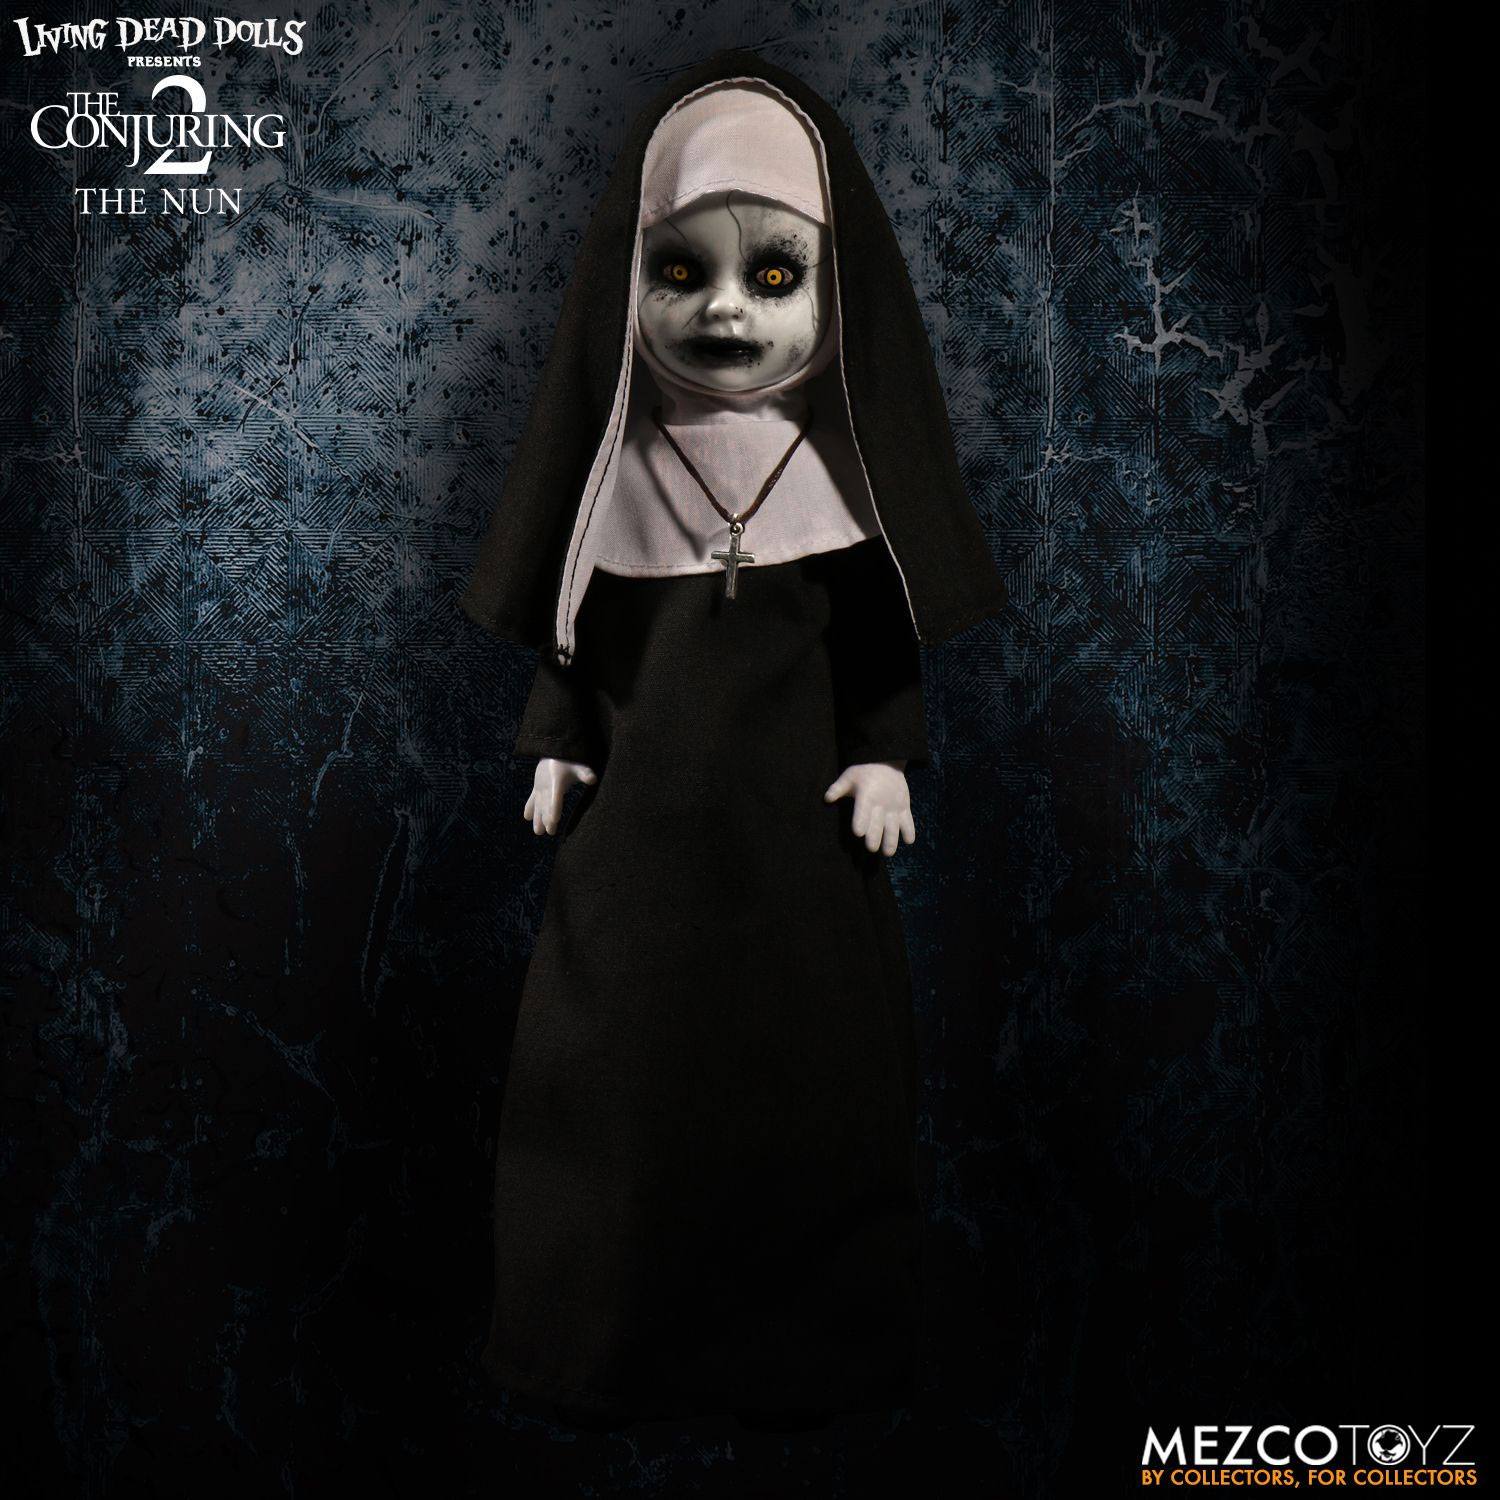 The Conjuring 2 Living Dead Dolls Doll The Nun 25 cm Top Merken Winkel